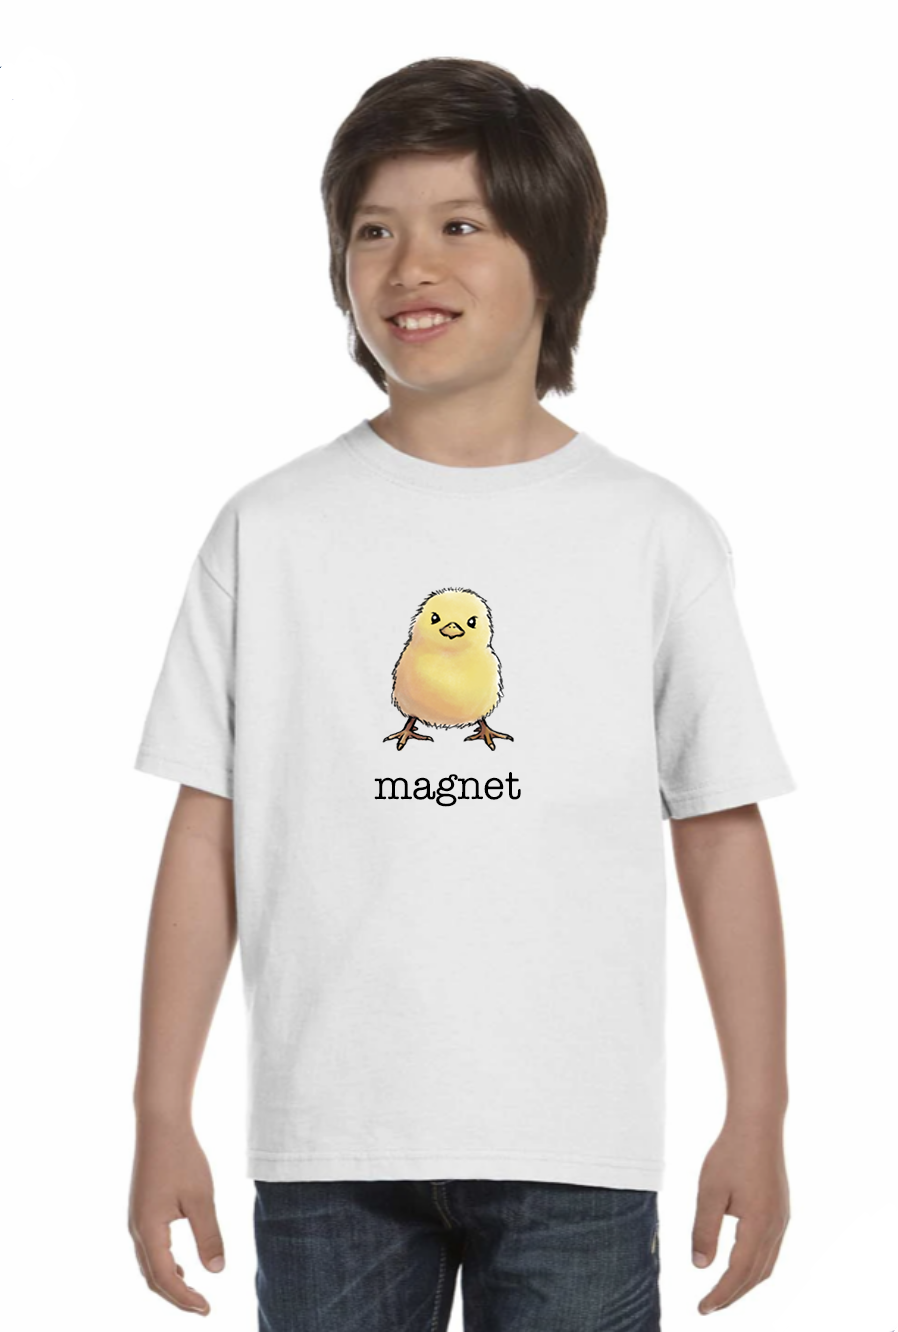 "Chick Magnet" short sleeve tee